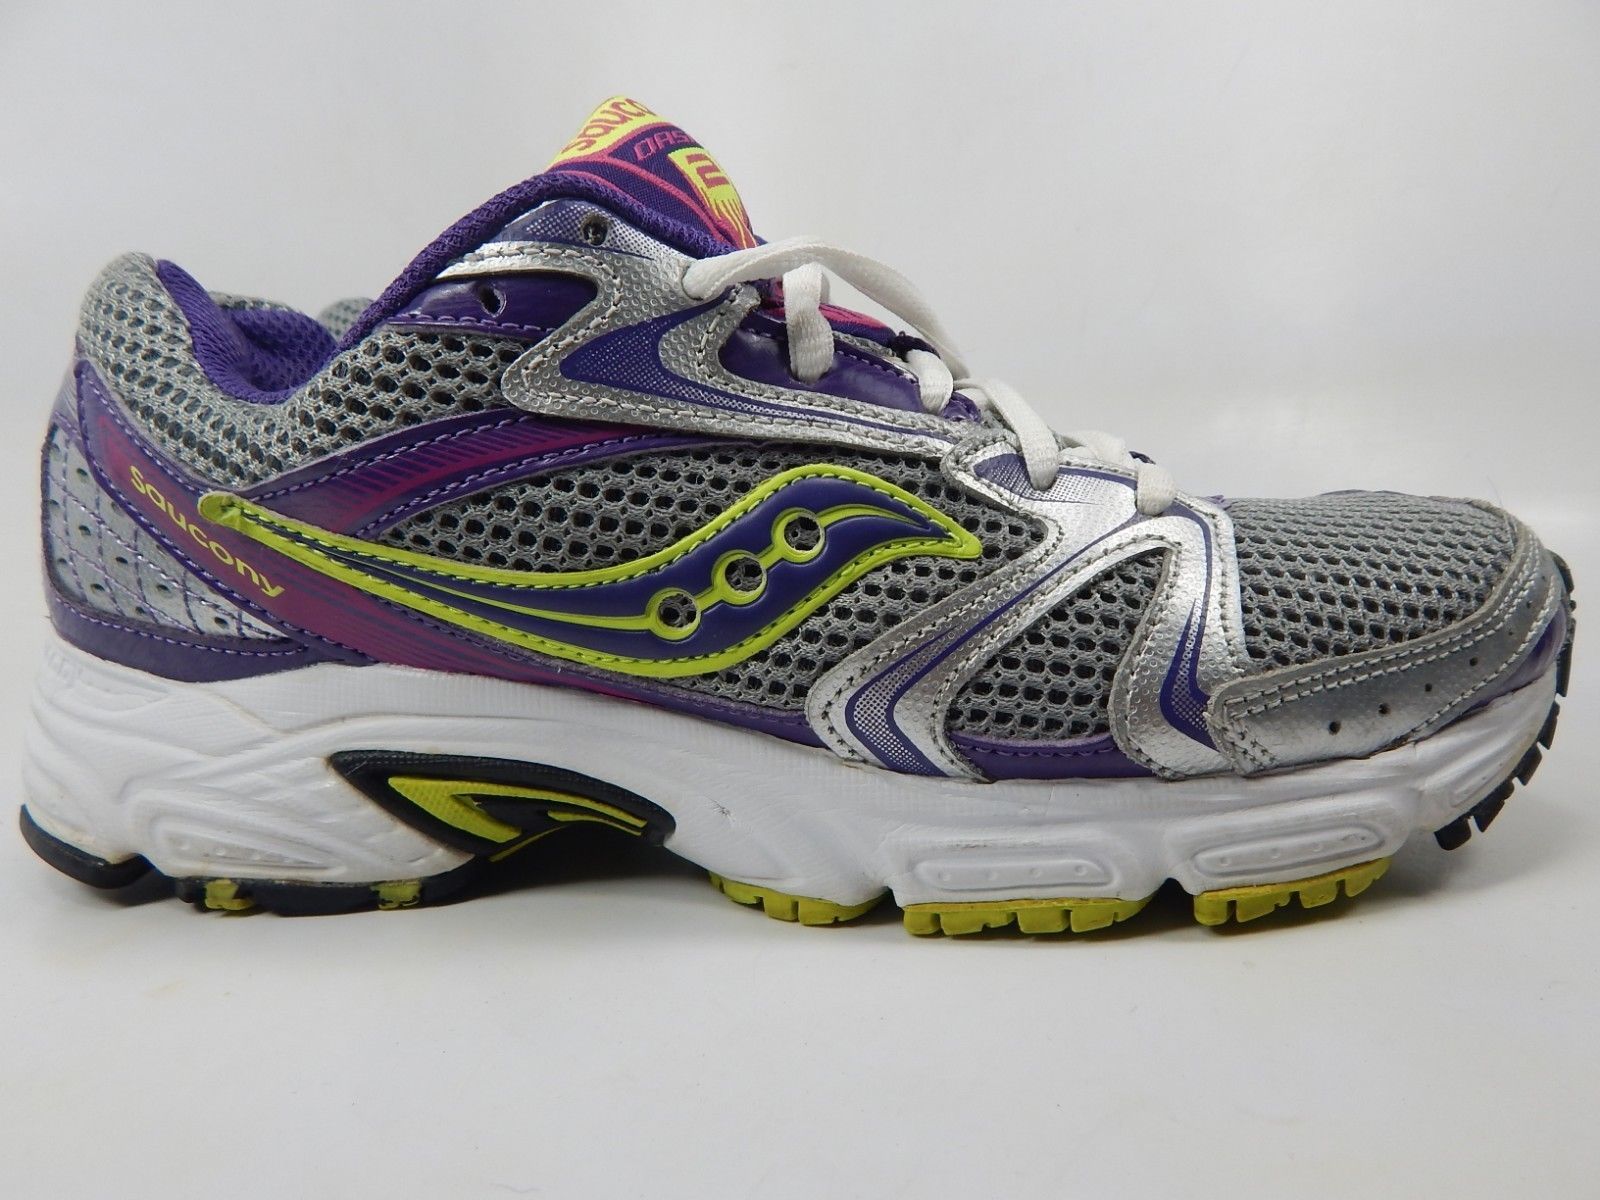 Saucony Oasis 2 Size US 8.5 M (B) EU 40 Women's Running Shoes Silver ...